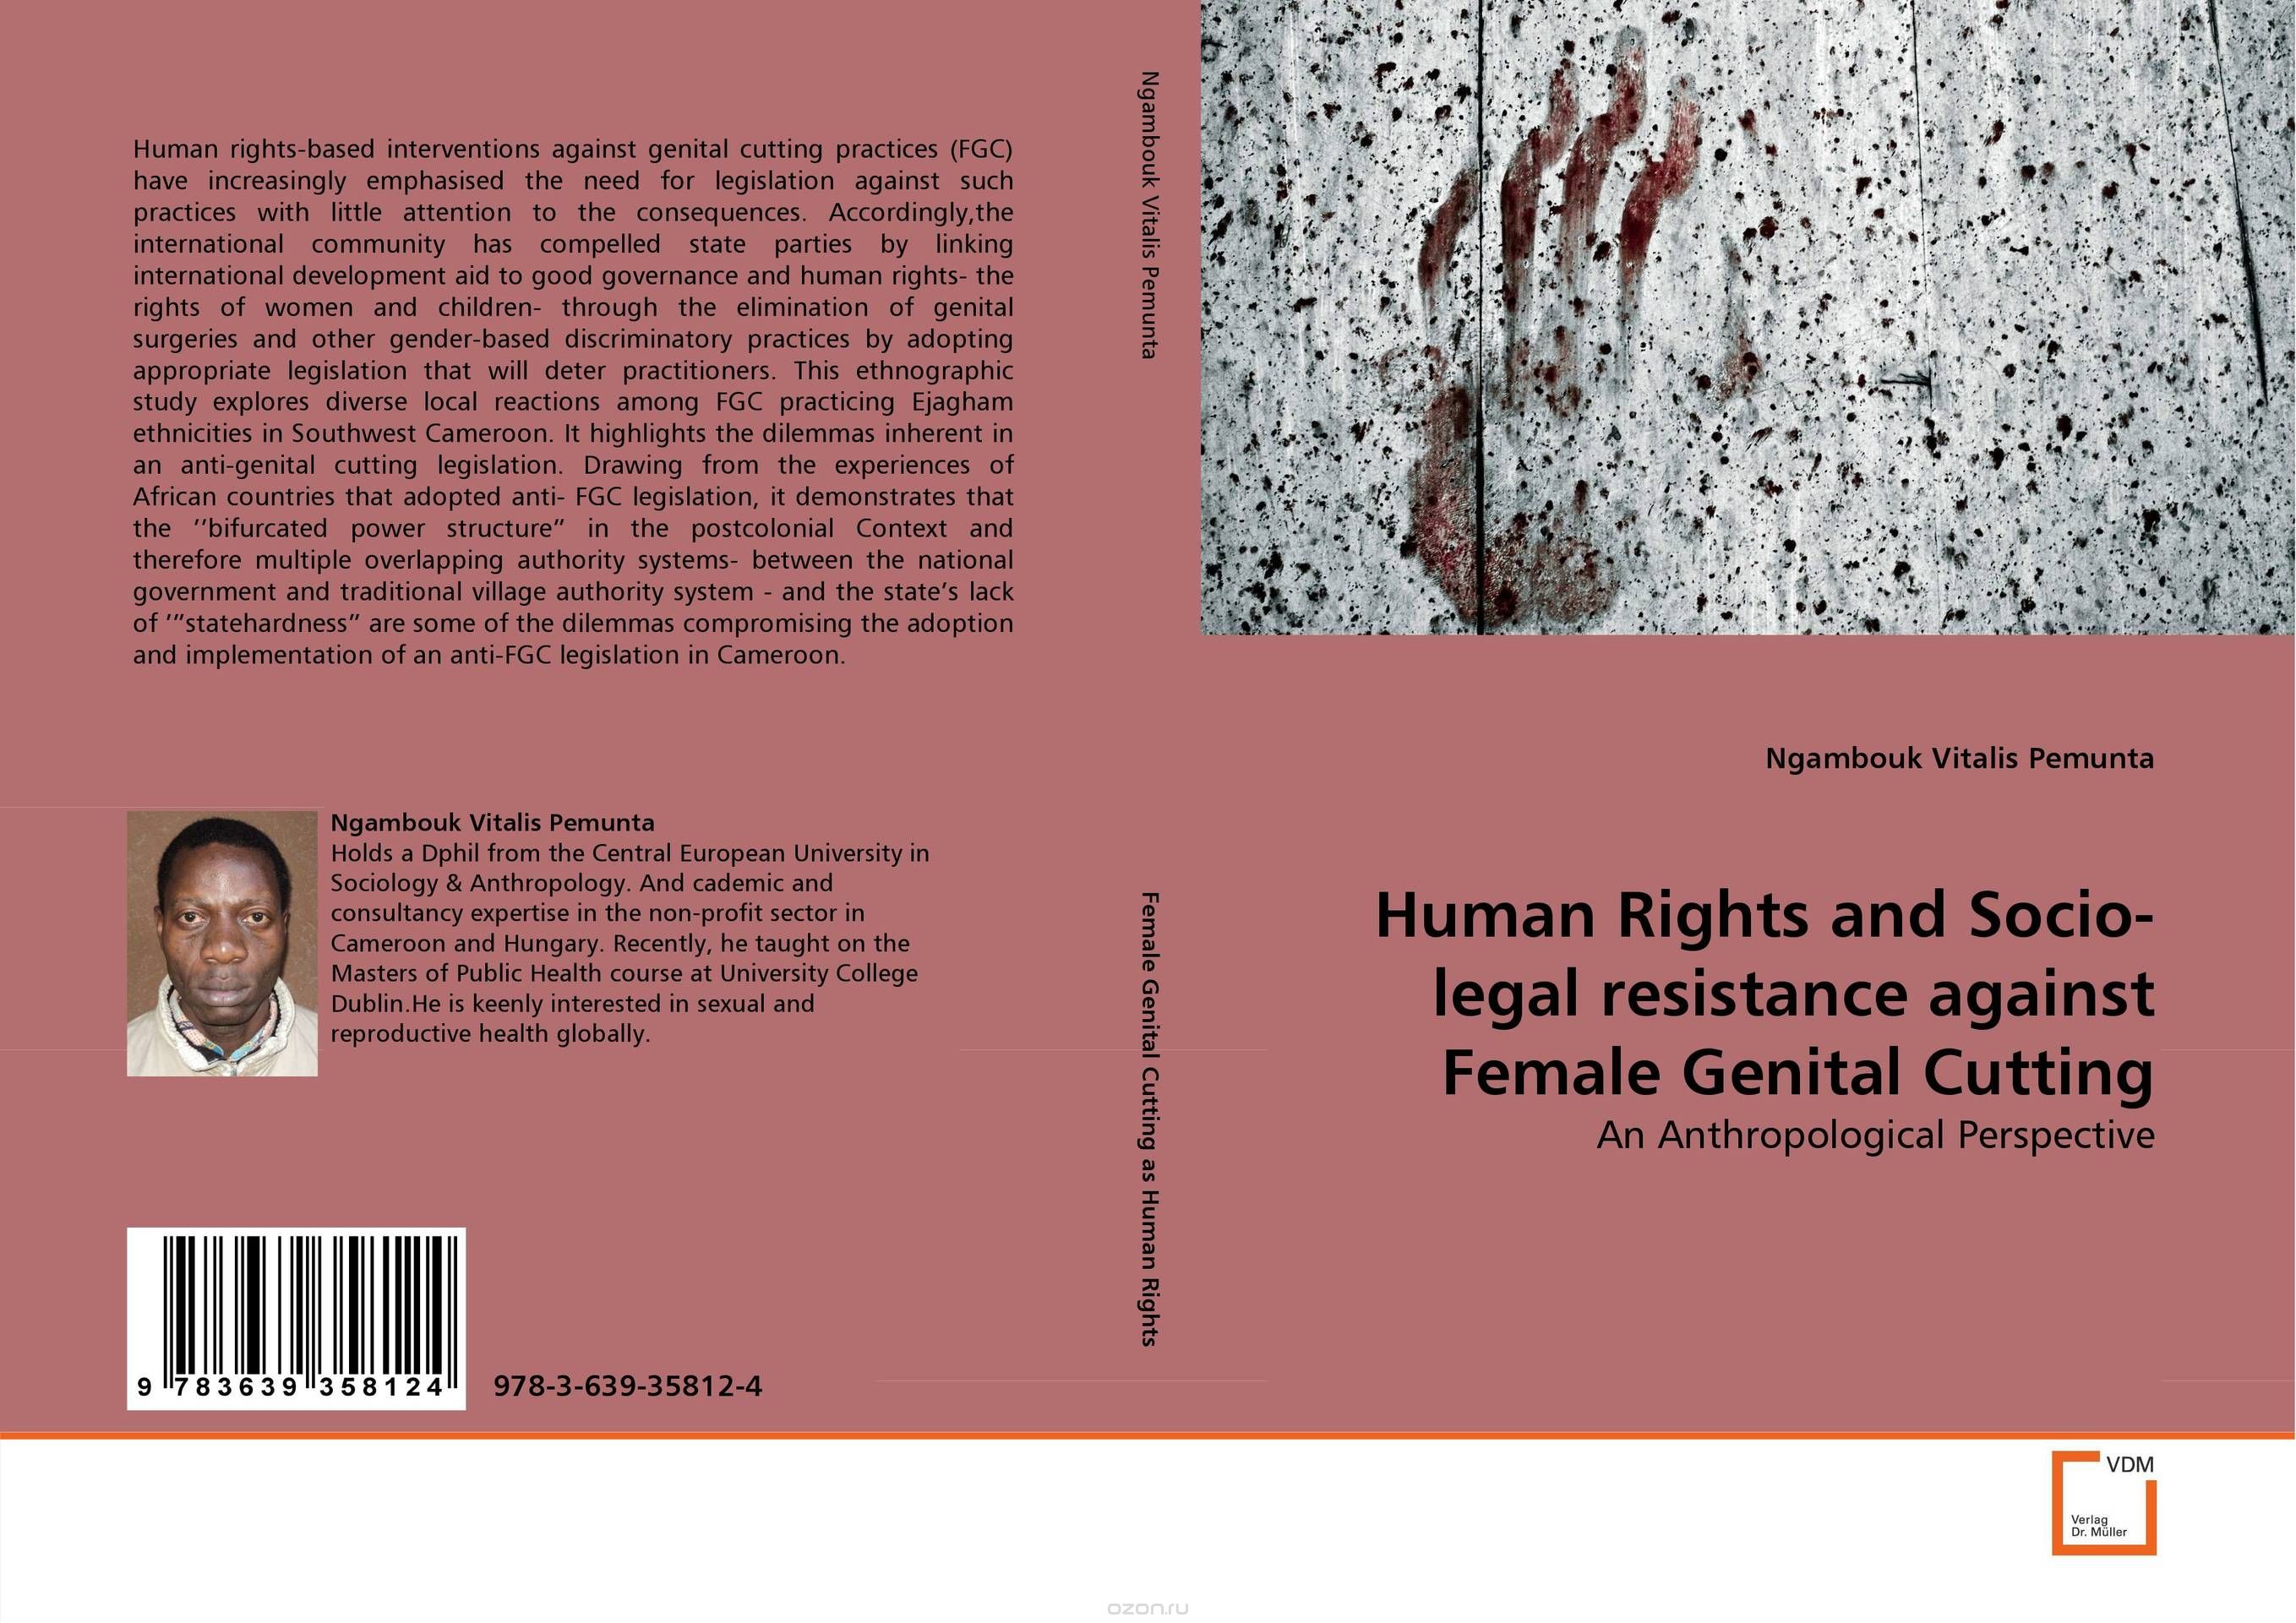 Скачать книгу "Human Rights and Socio-legal resistance against Female Genital Cutting"